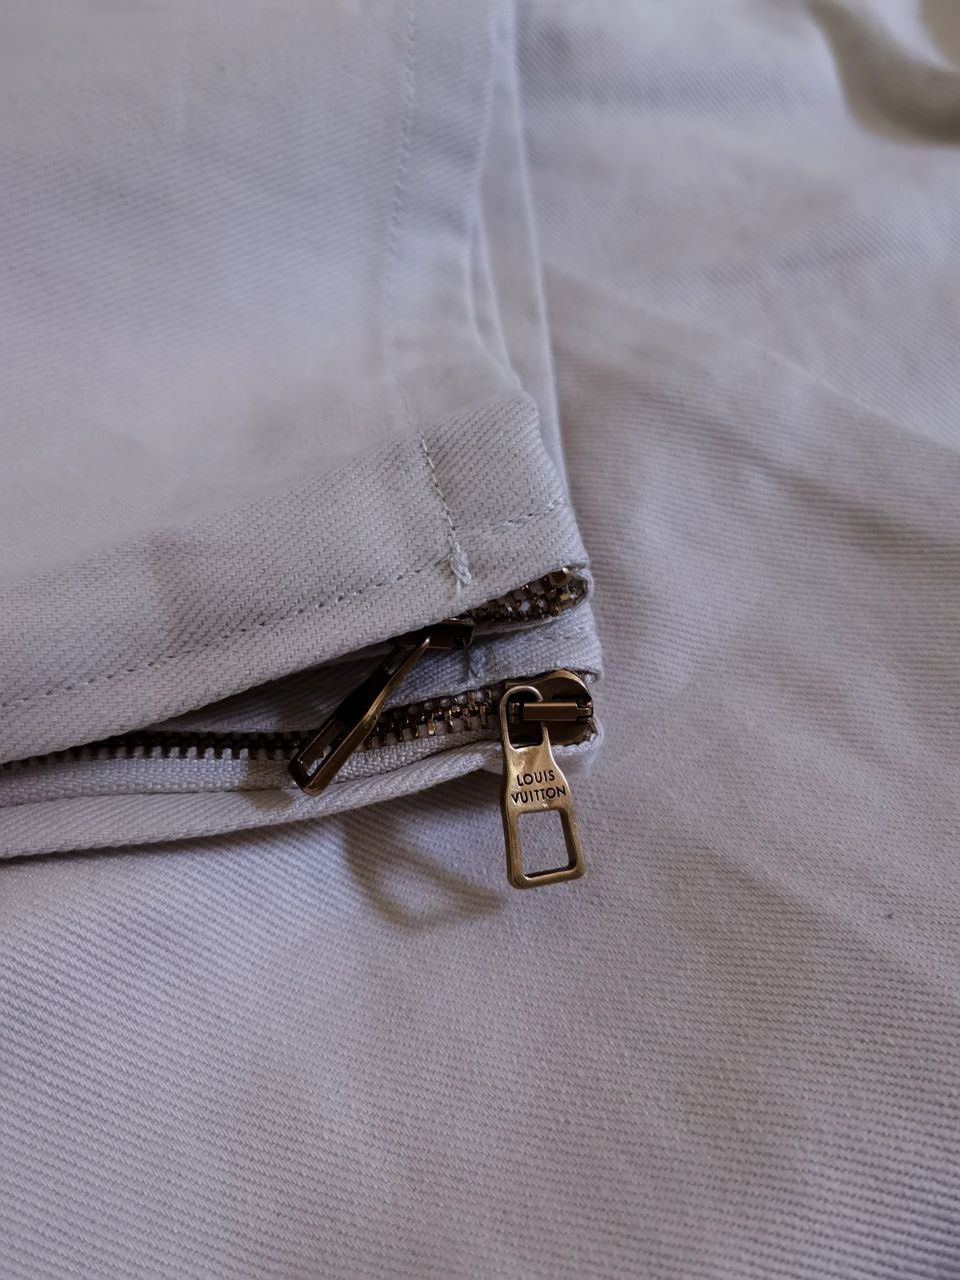 Louis Vuitton Workwear Denim Carpenter Pants Indigo. Size 34